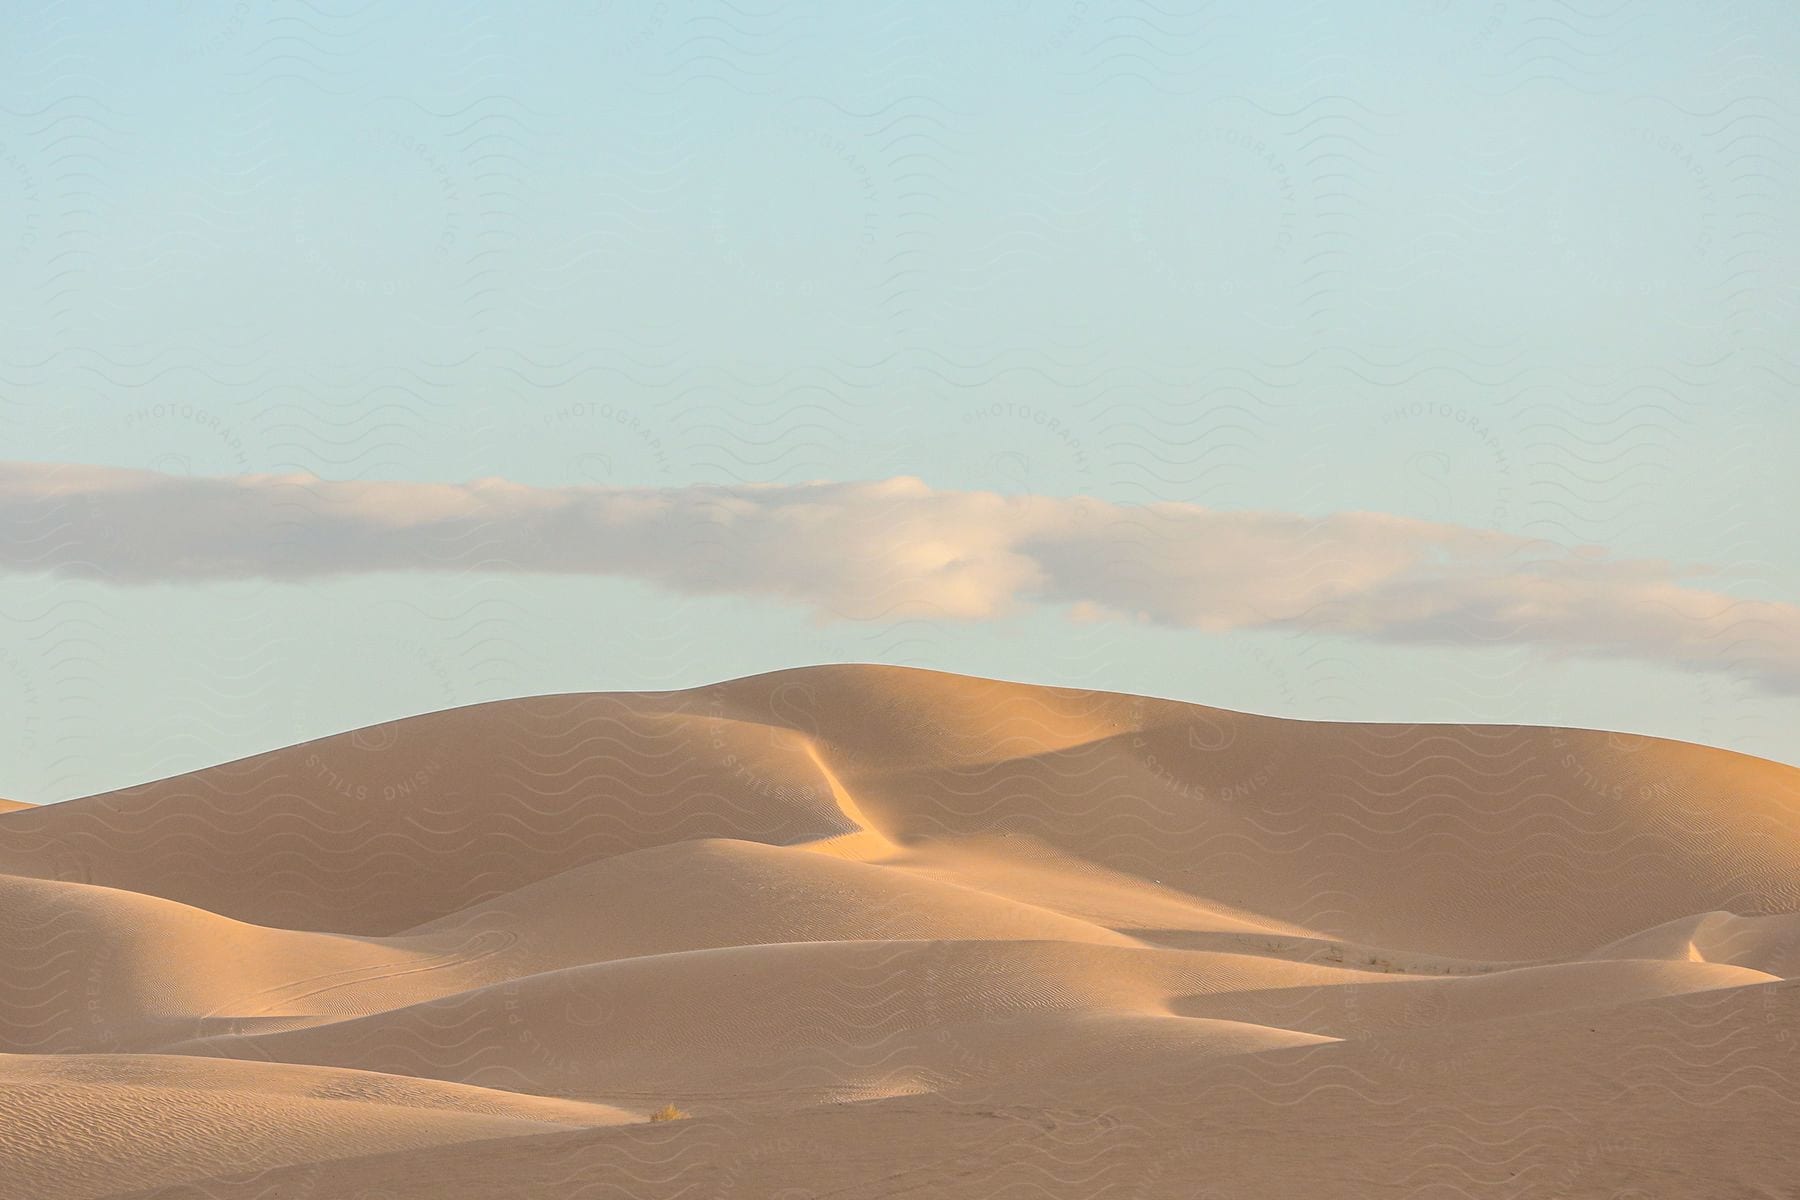 A barren desert landscape with sandy dunes and a cloudy sky